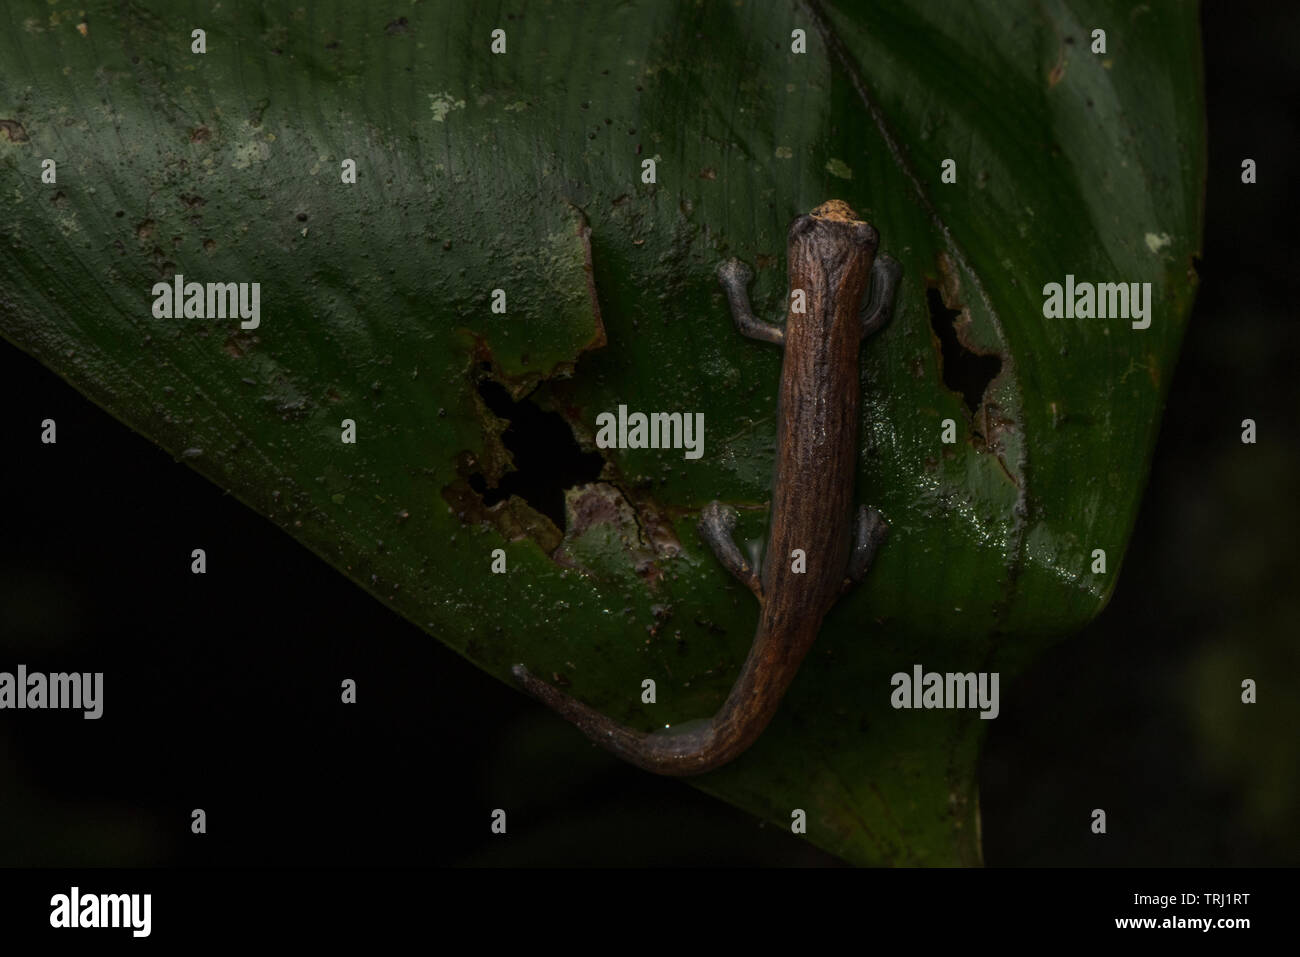 Nauta salamander (Bolitoglossa altamazonica) from the Amazon jungle in Yasuni, Ecuador. These salamanders hunt on the surface of leaves at night. Stock Photo